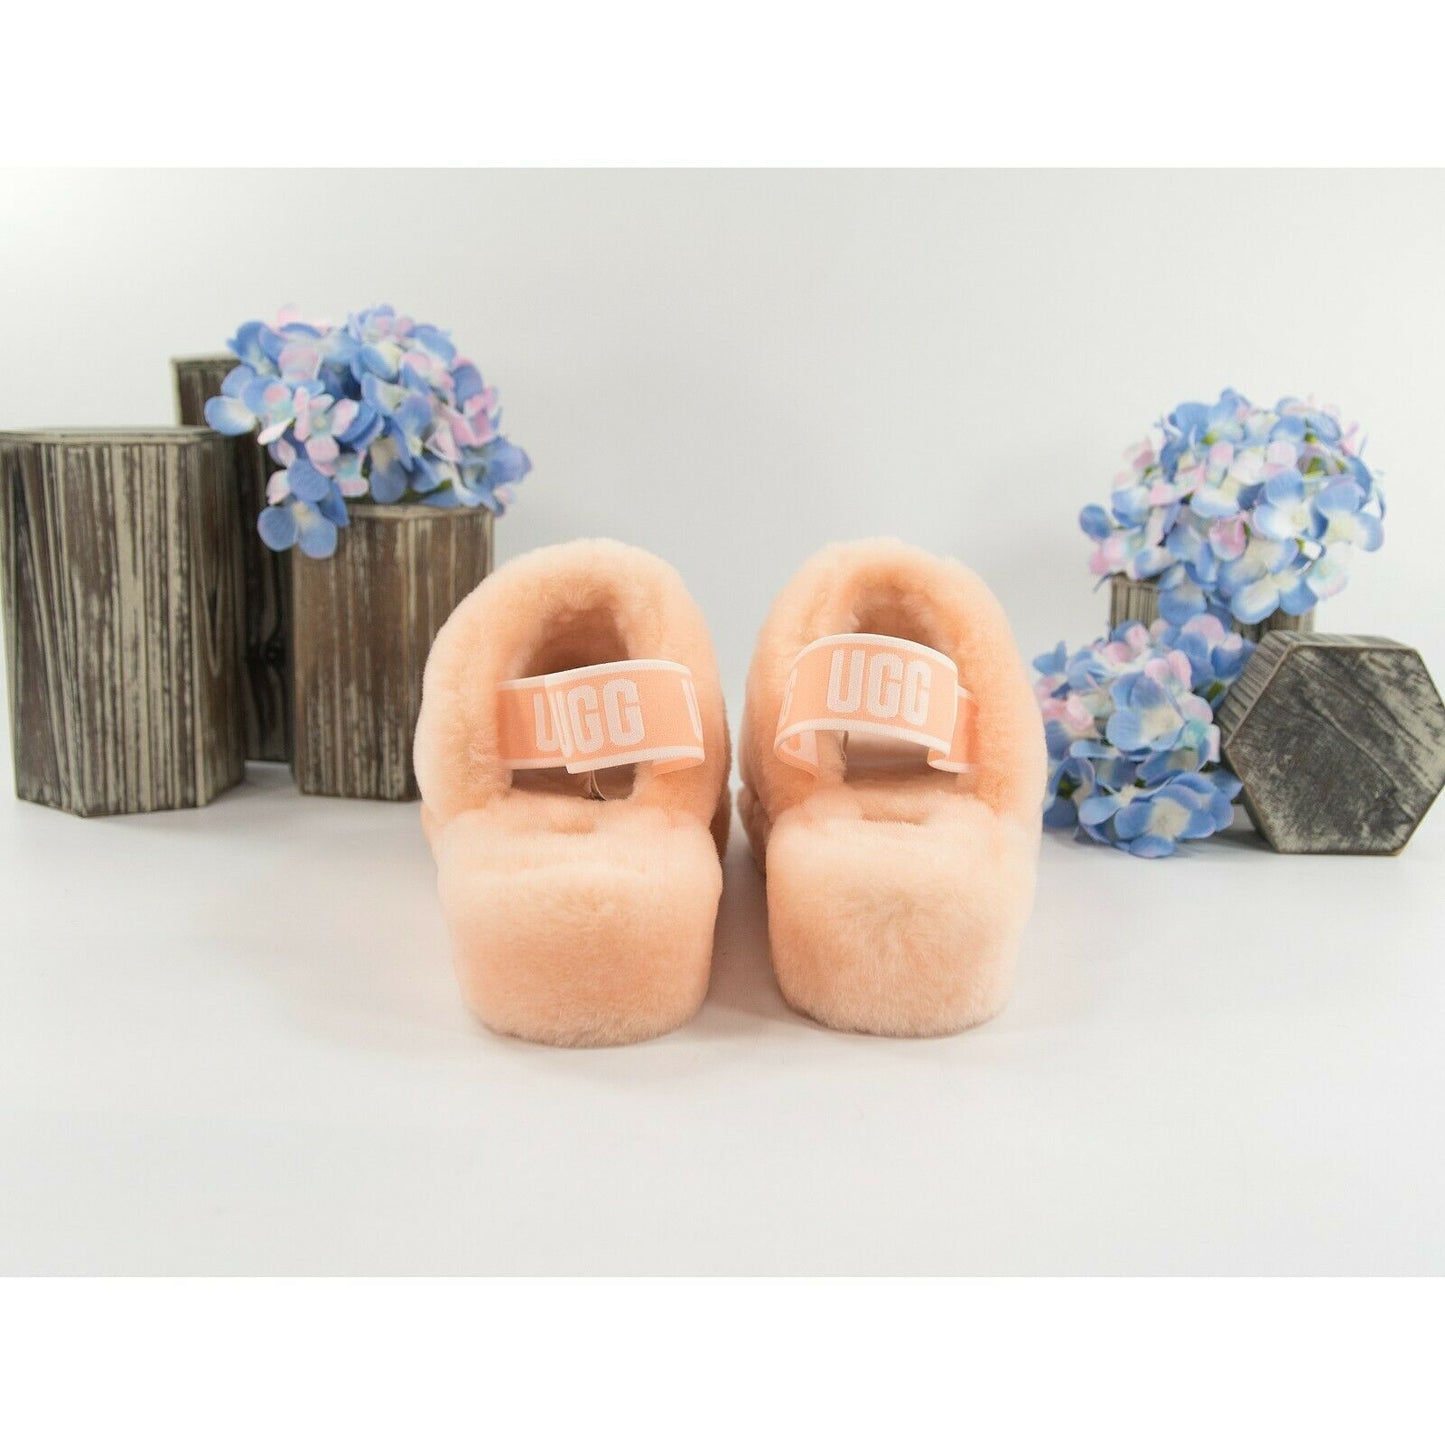 UGG Fluff Yea Peach Sheepskin Fur Slippers Slides Sandals Size 8 NIB